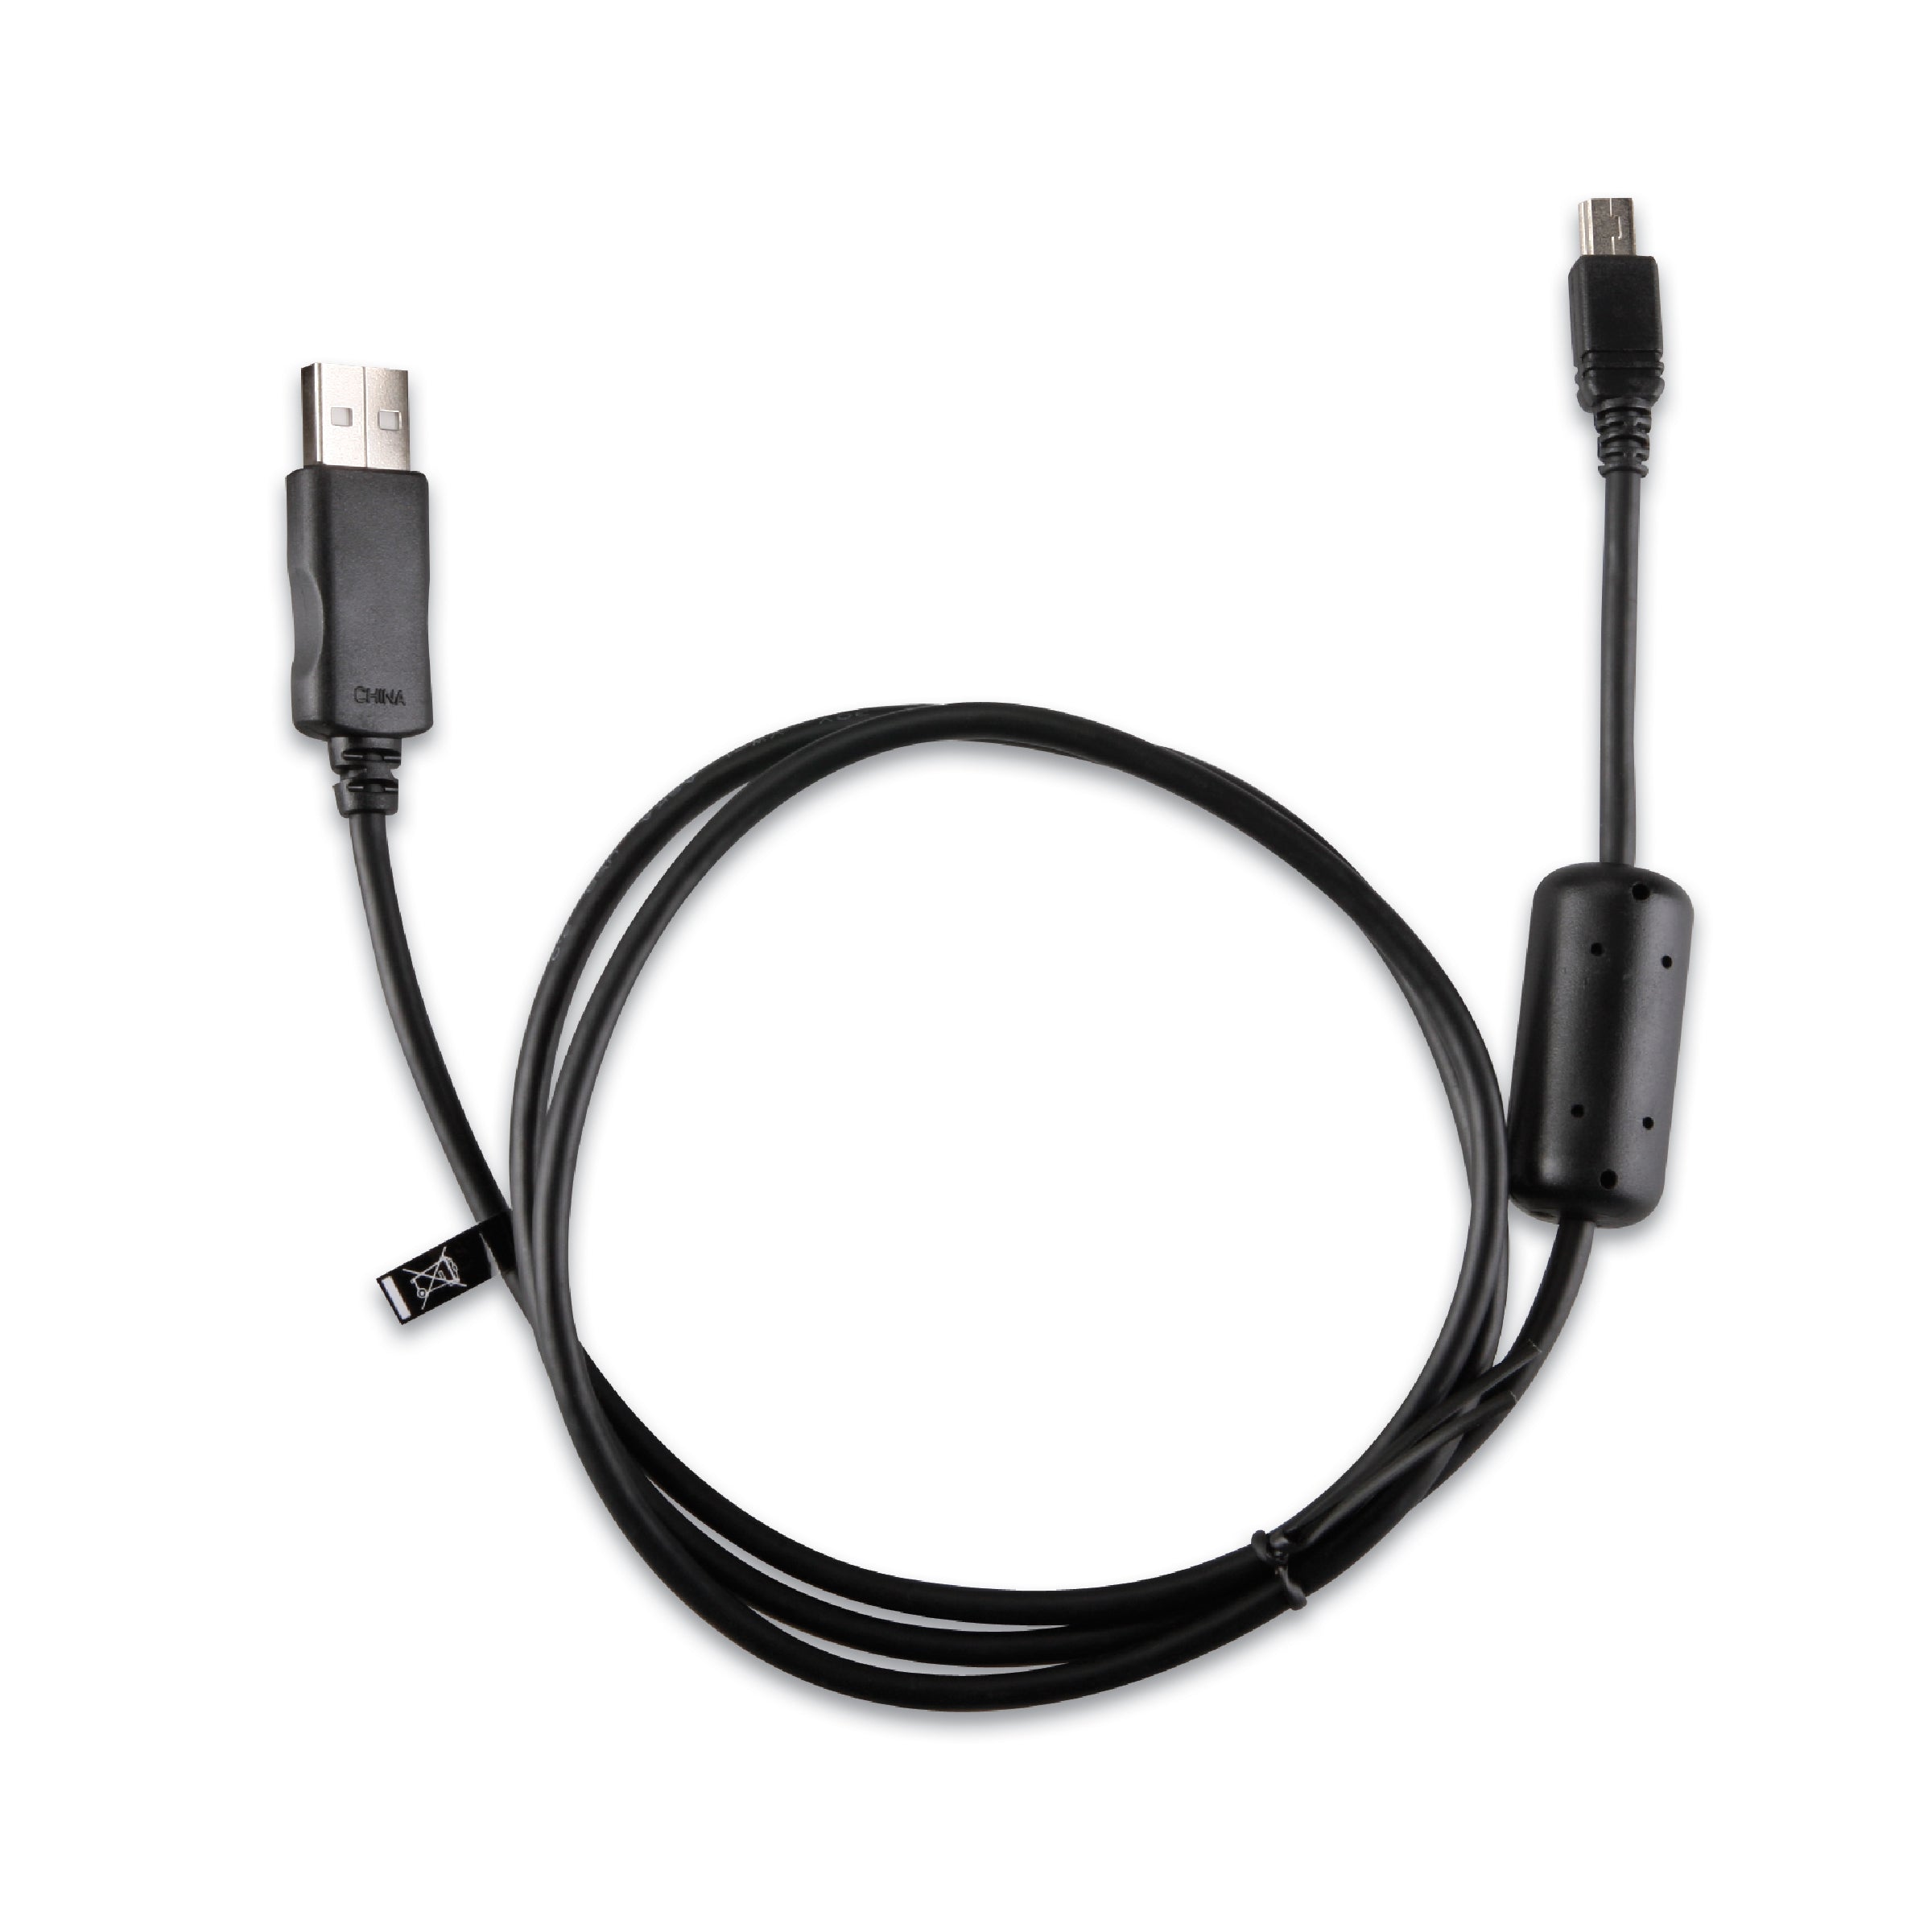 Garmin USB/micro USB cable